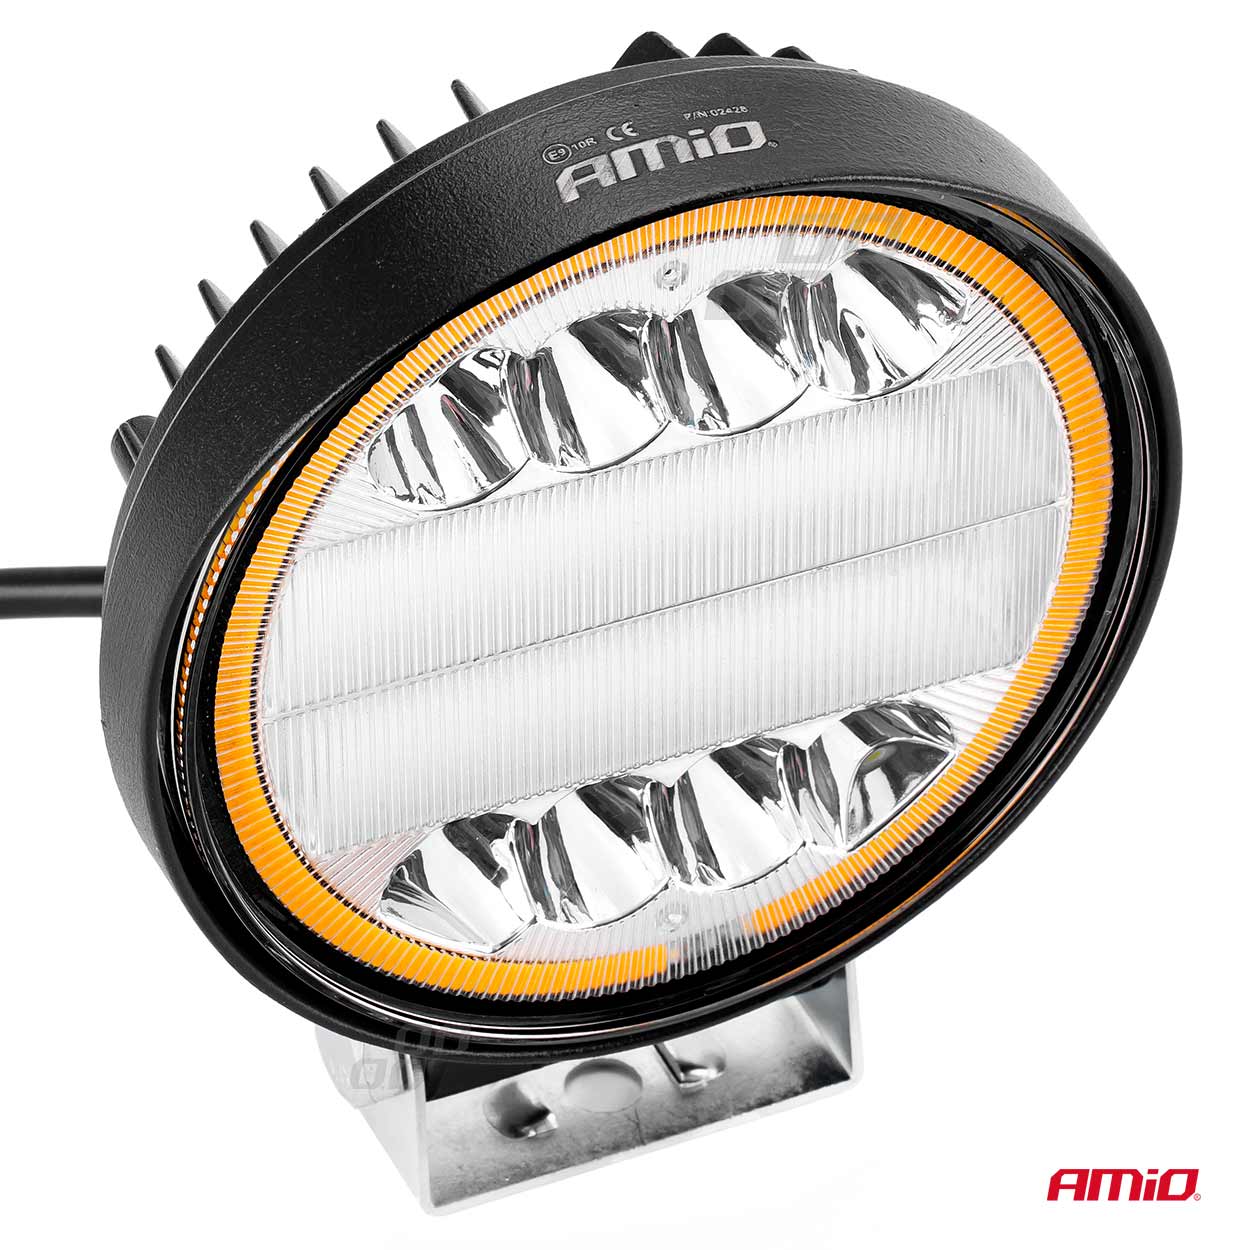 Proiector cu LED din metal rotund Combo Angel Eyes cu 2 functii, 9/36V, Amio thumb